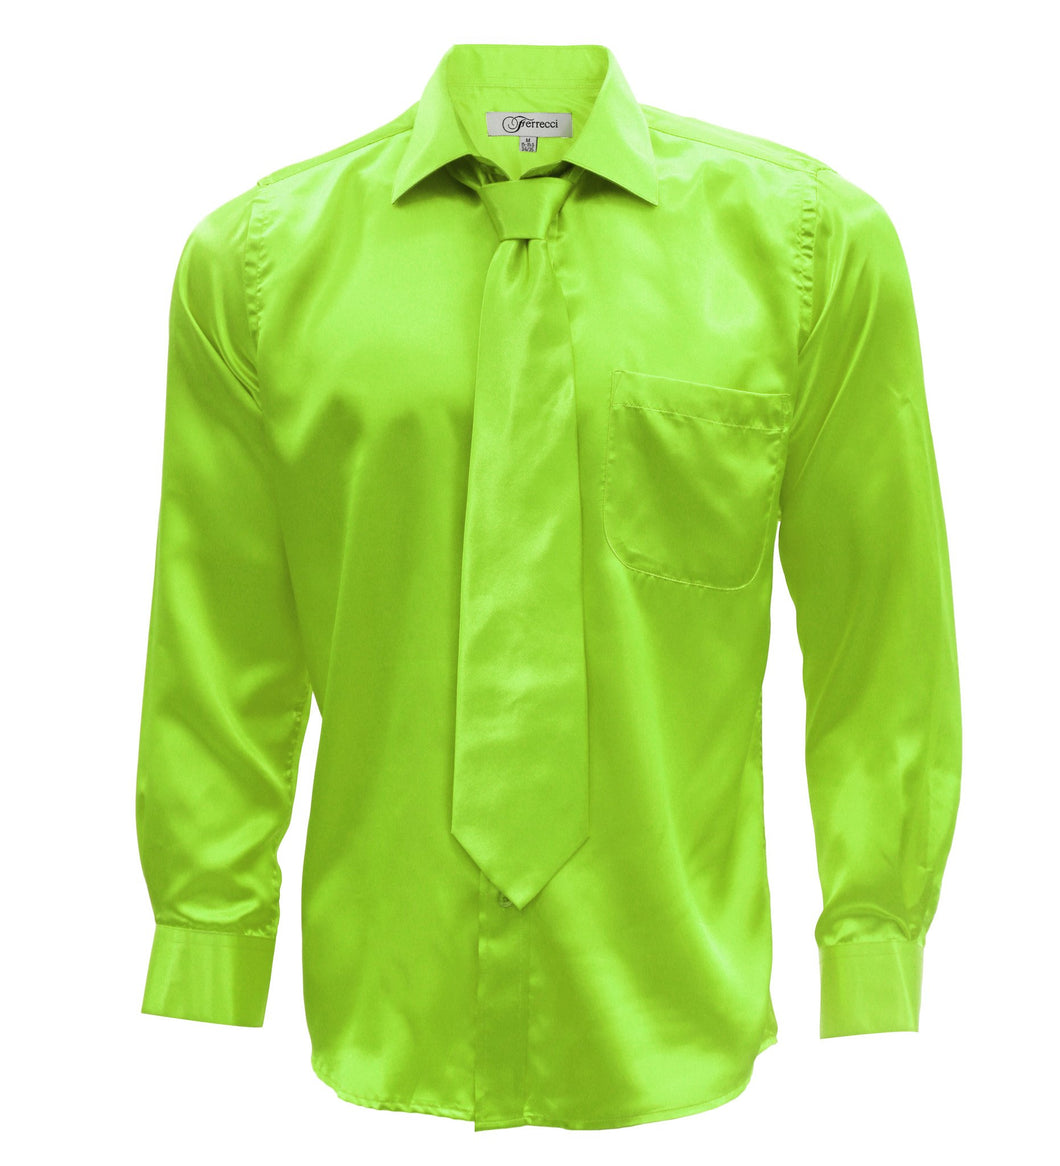 Lime Green Satin Regular Fit Dress Shirt, Tie & Hanky Set - Ferrecci USA 